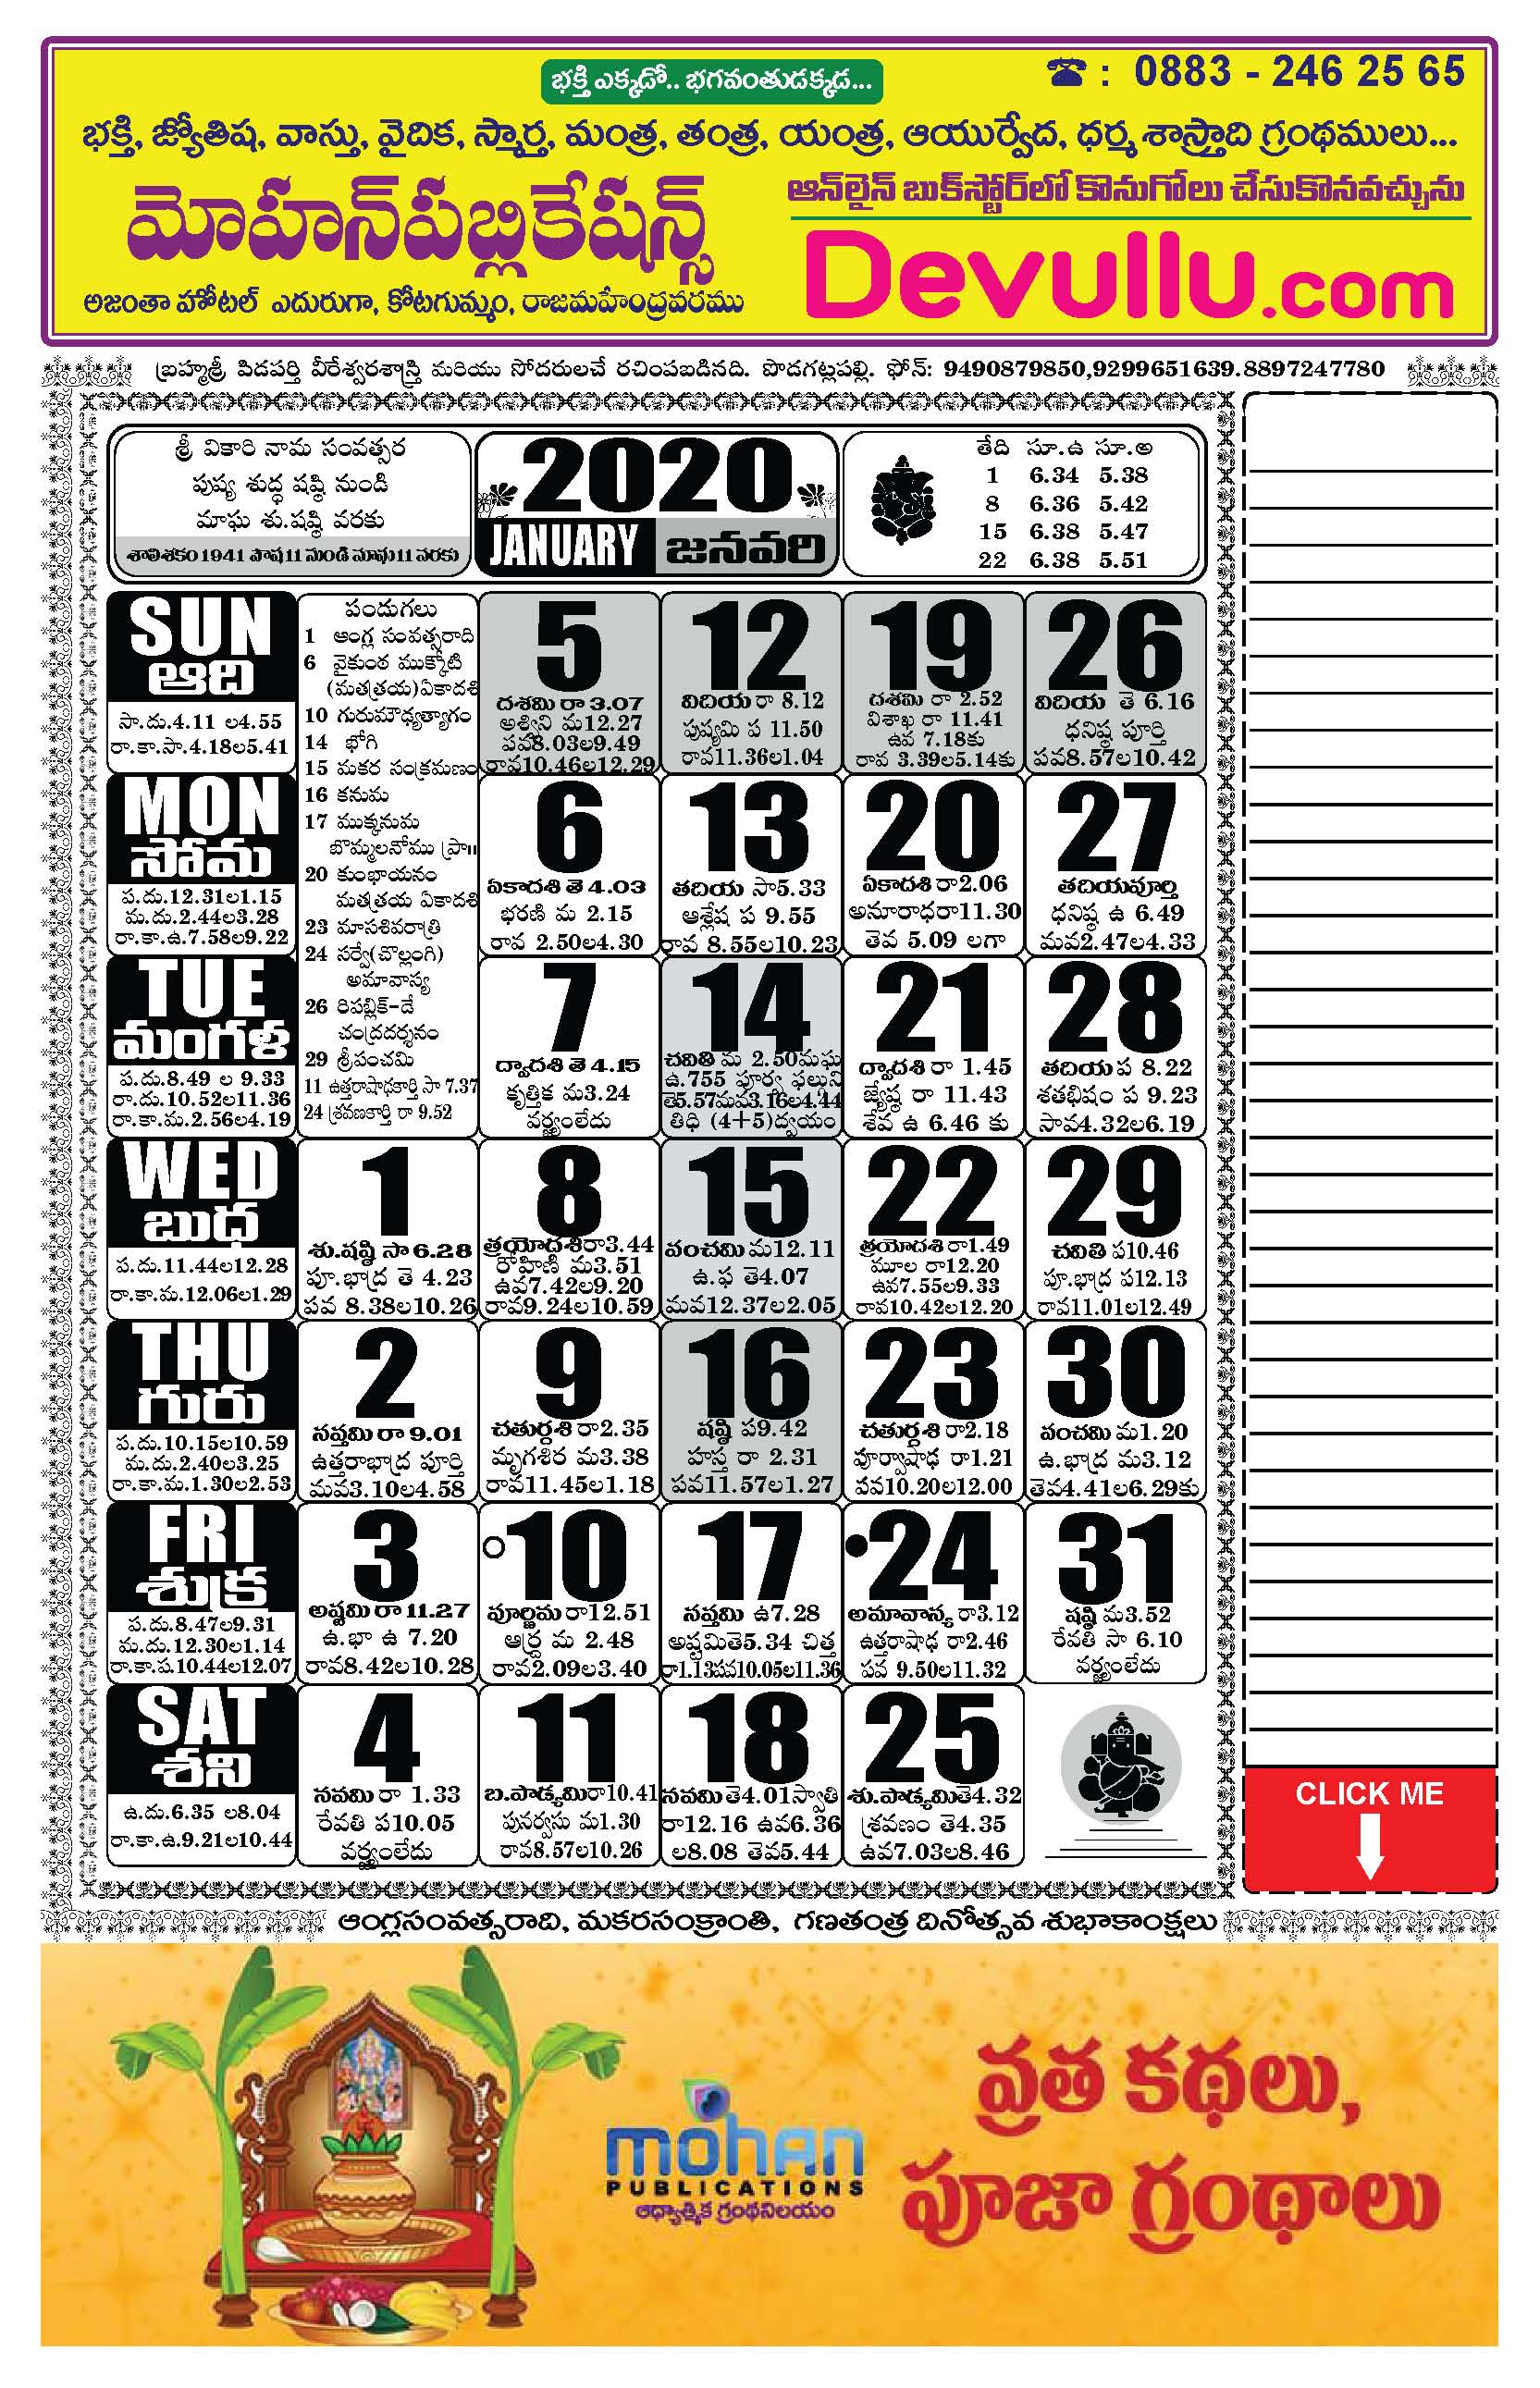 Download Telugu Calendar 2020 - Freega.